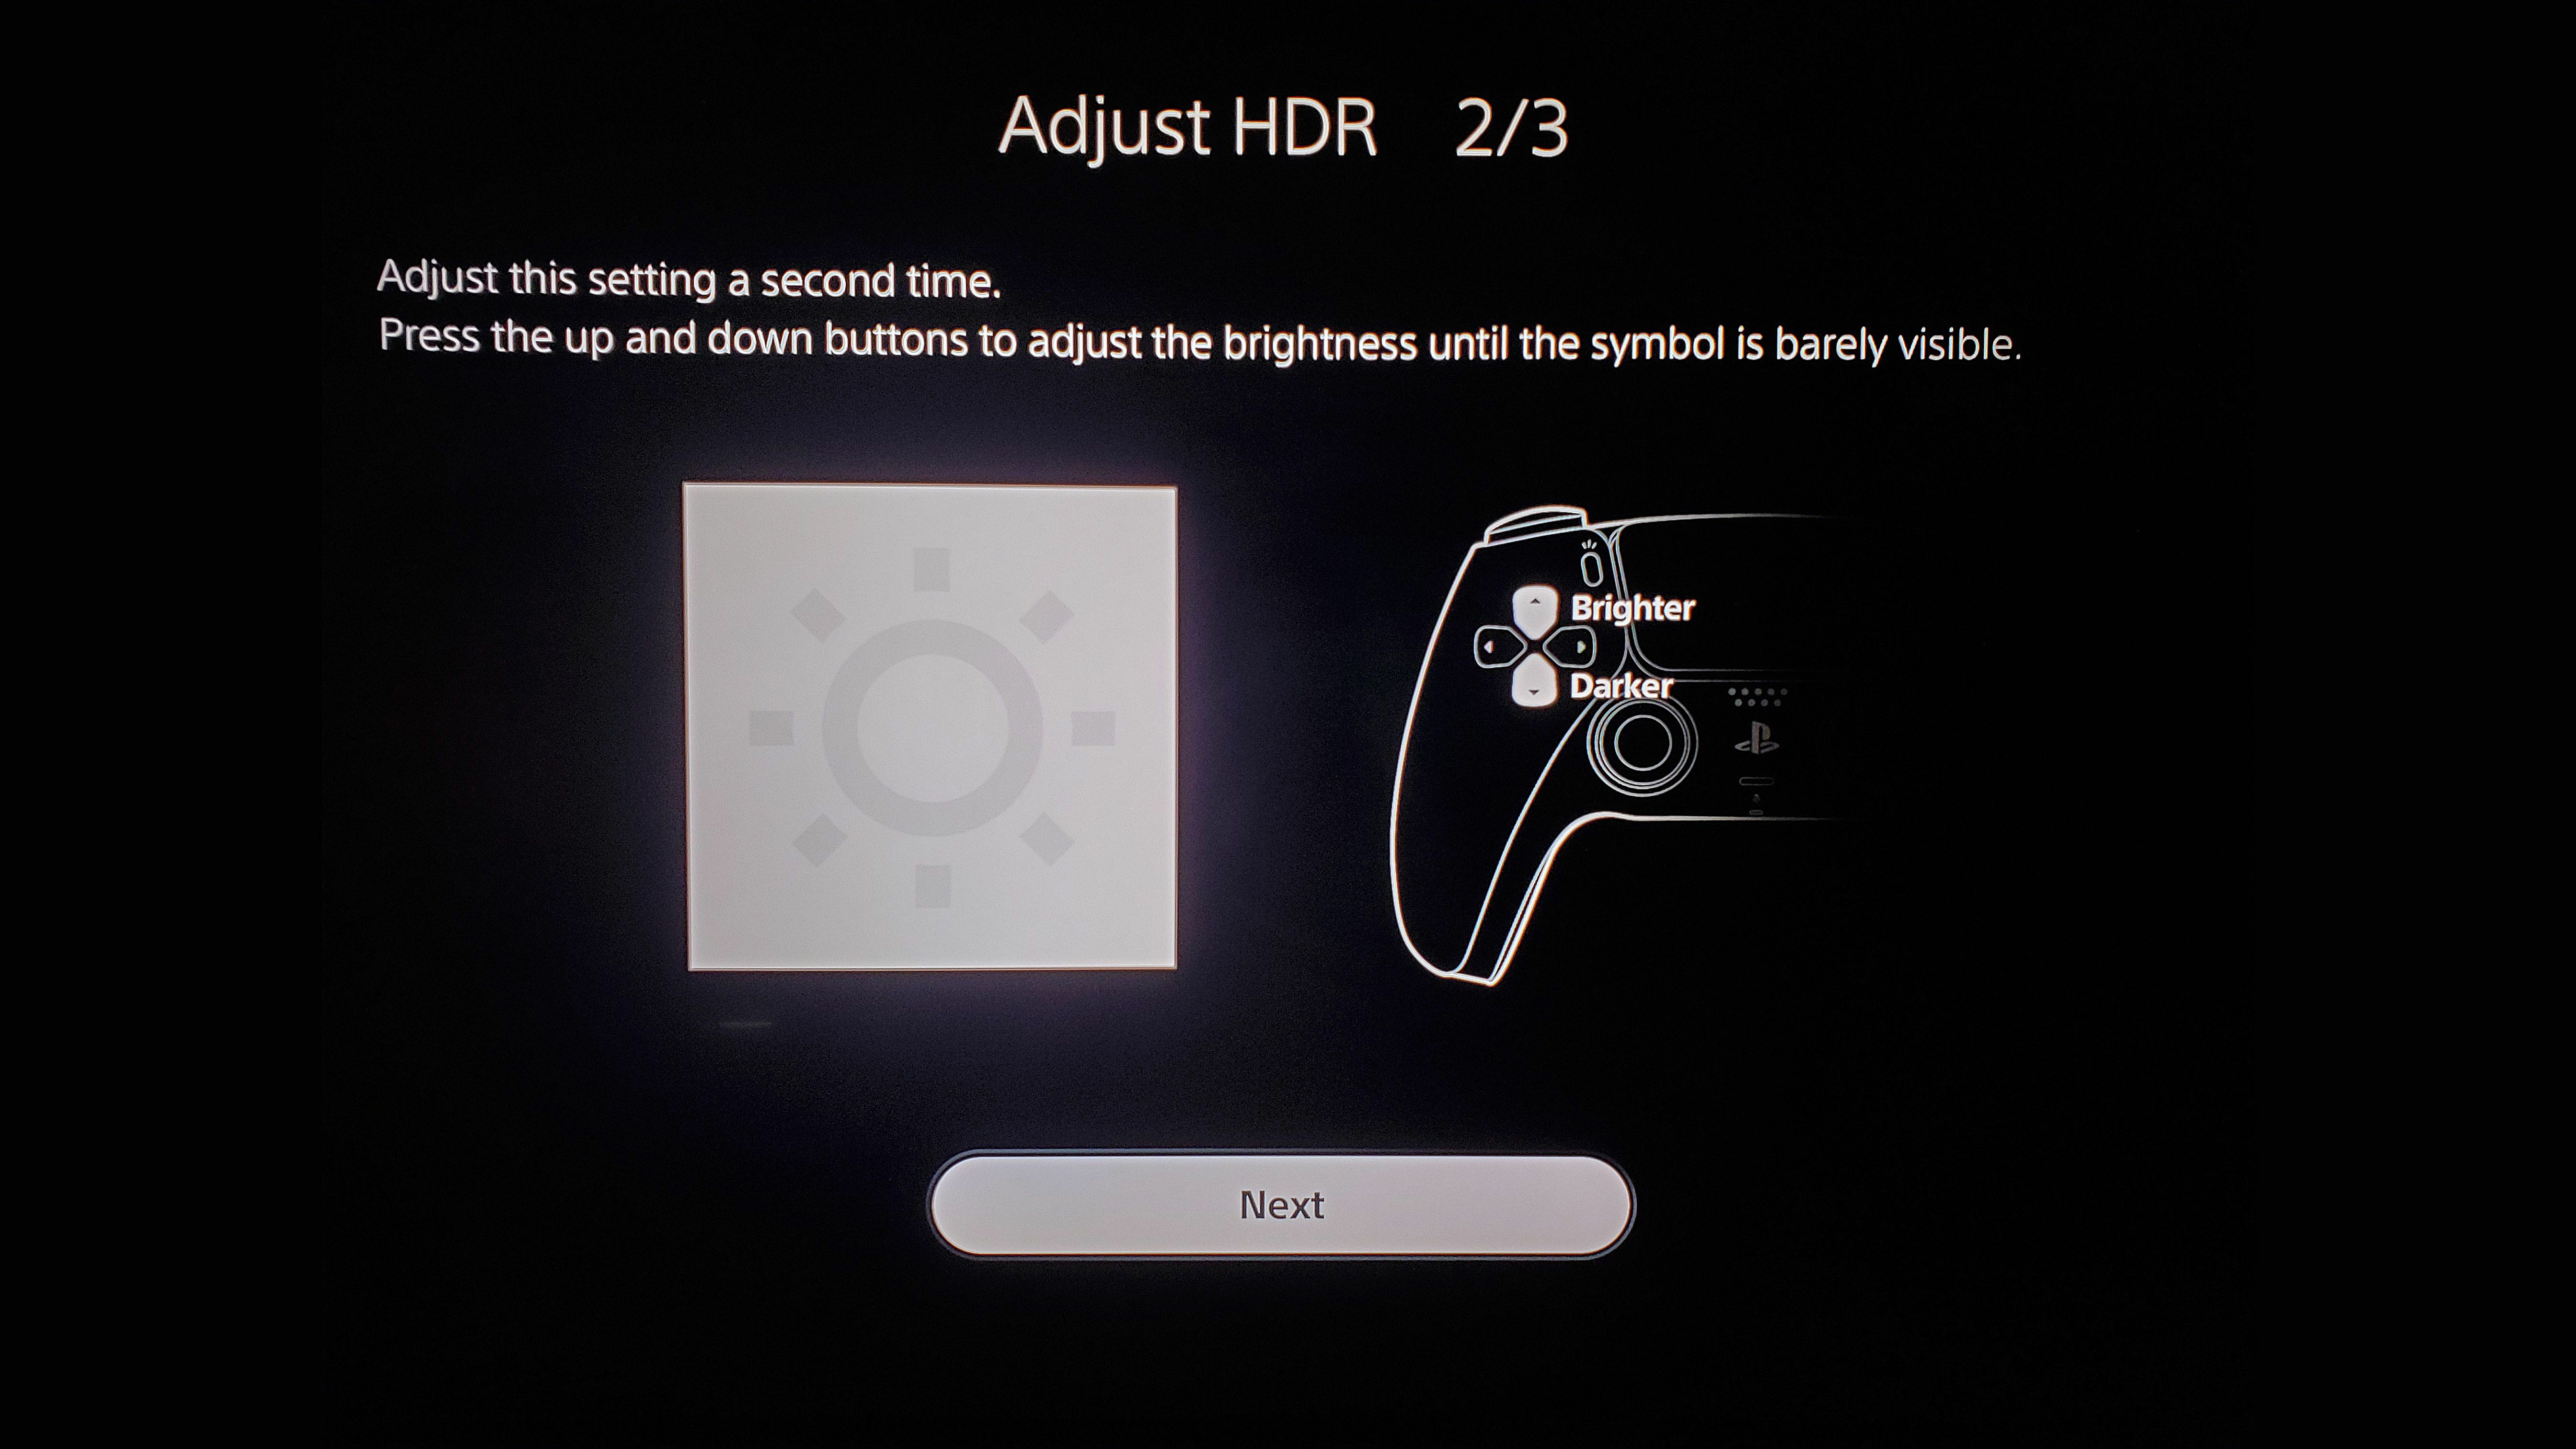 Hiệu chuẩn PS5 HDR